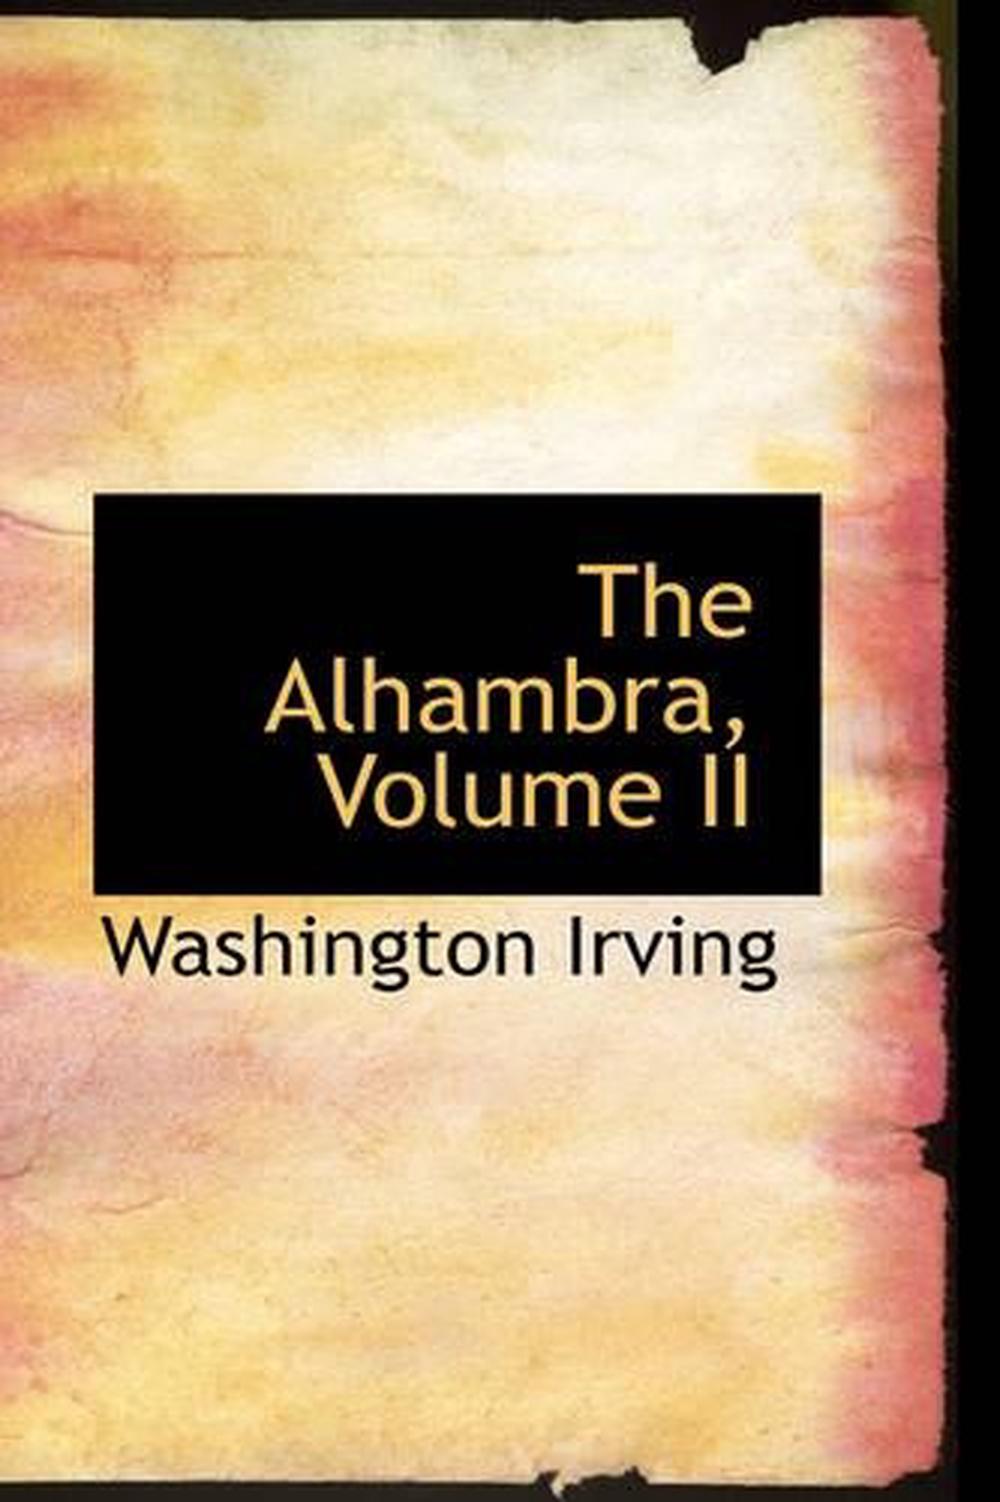 washington irving and the alhambra